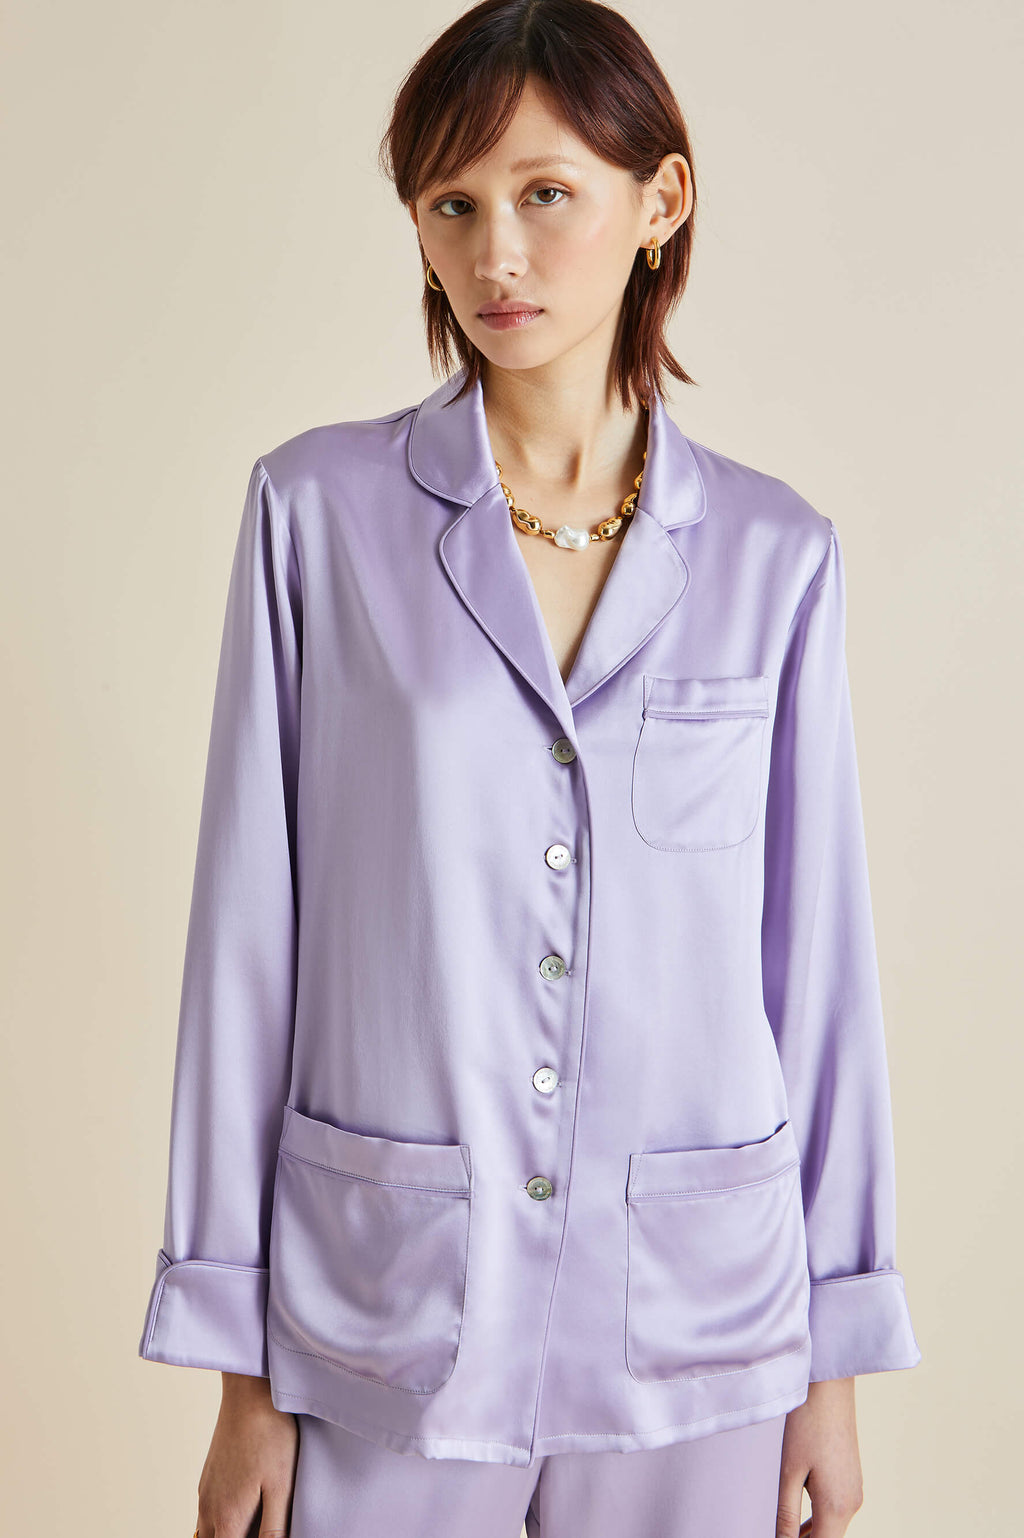 The Lilac Set LV – Inspired Designer Long Sleeved Satin Pyjamas – Luda  Avenue